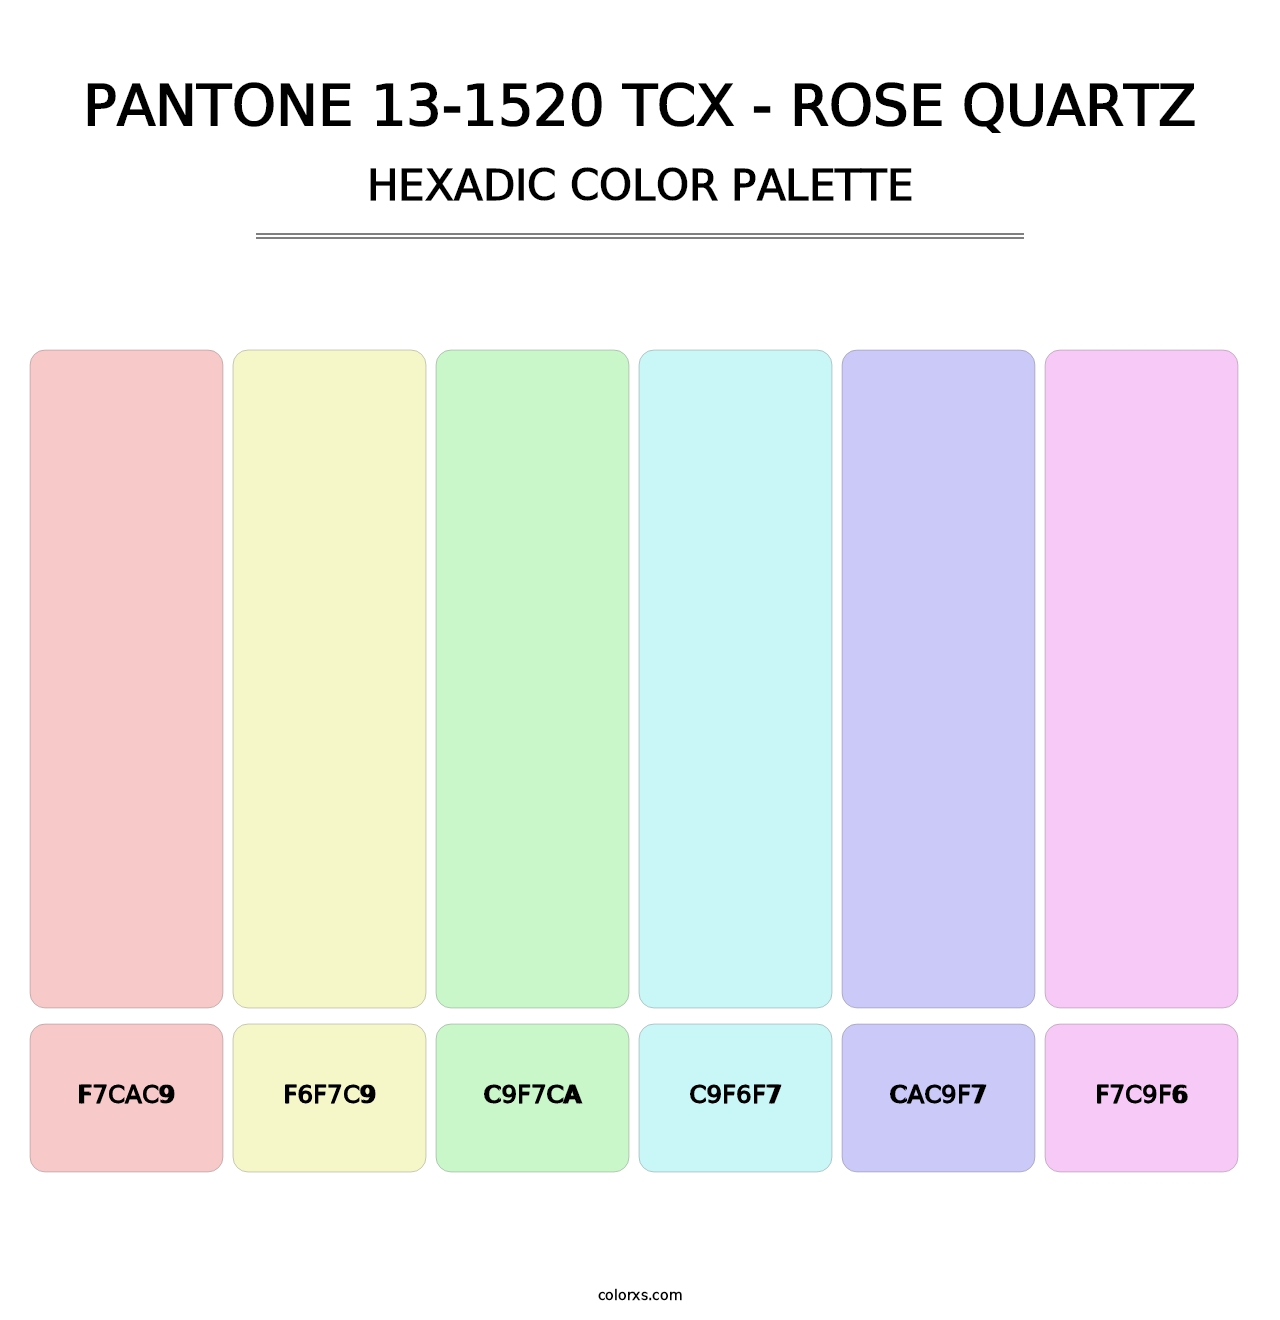 PANTONE 13-1520 TCX - Rose Quartz - Hexadic Color Palette